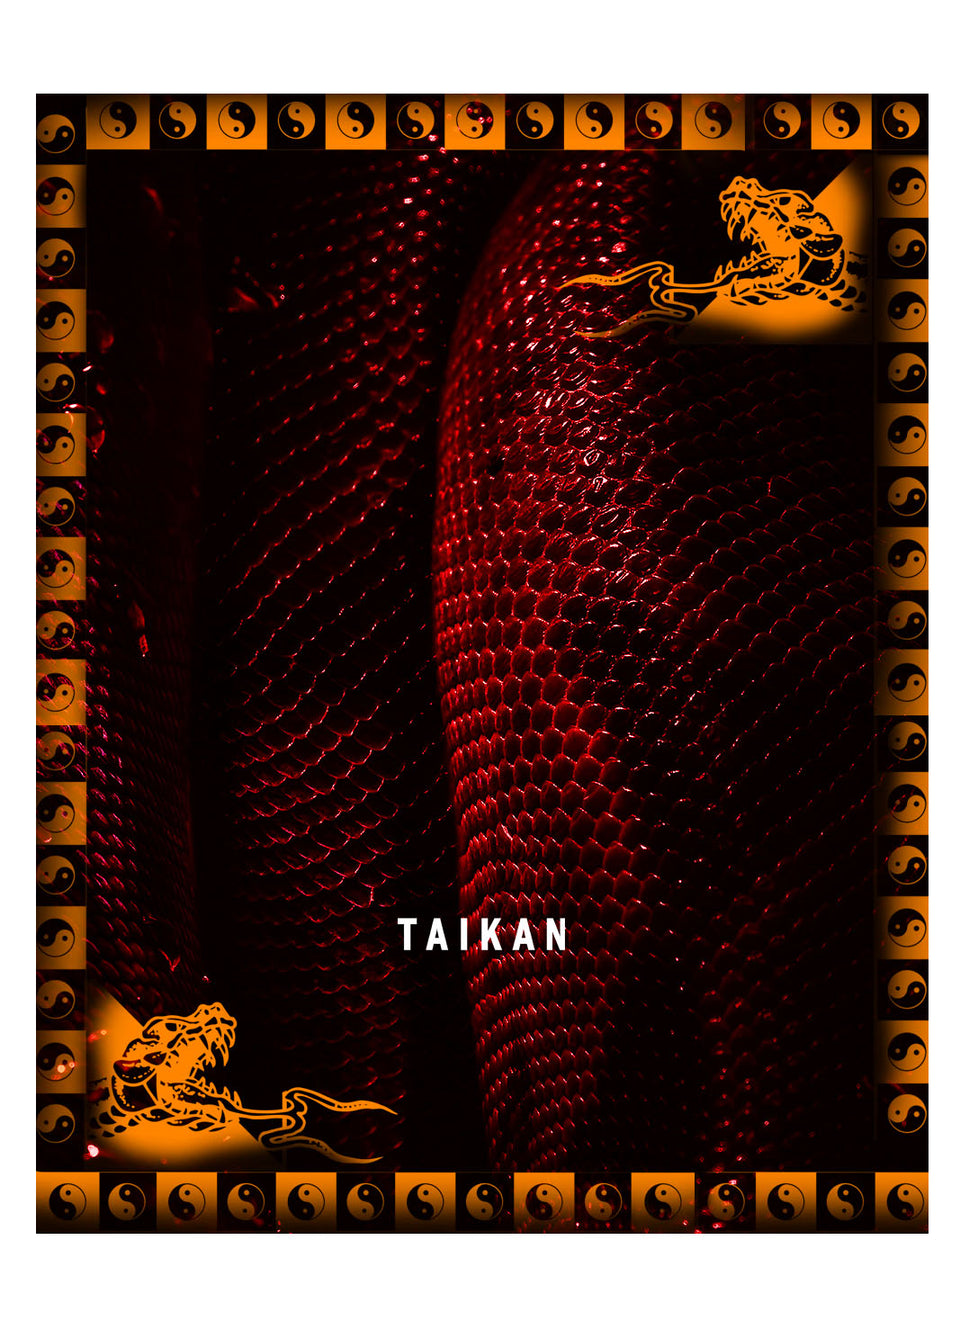 TAIKAN By BOOYAH PATROL